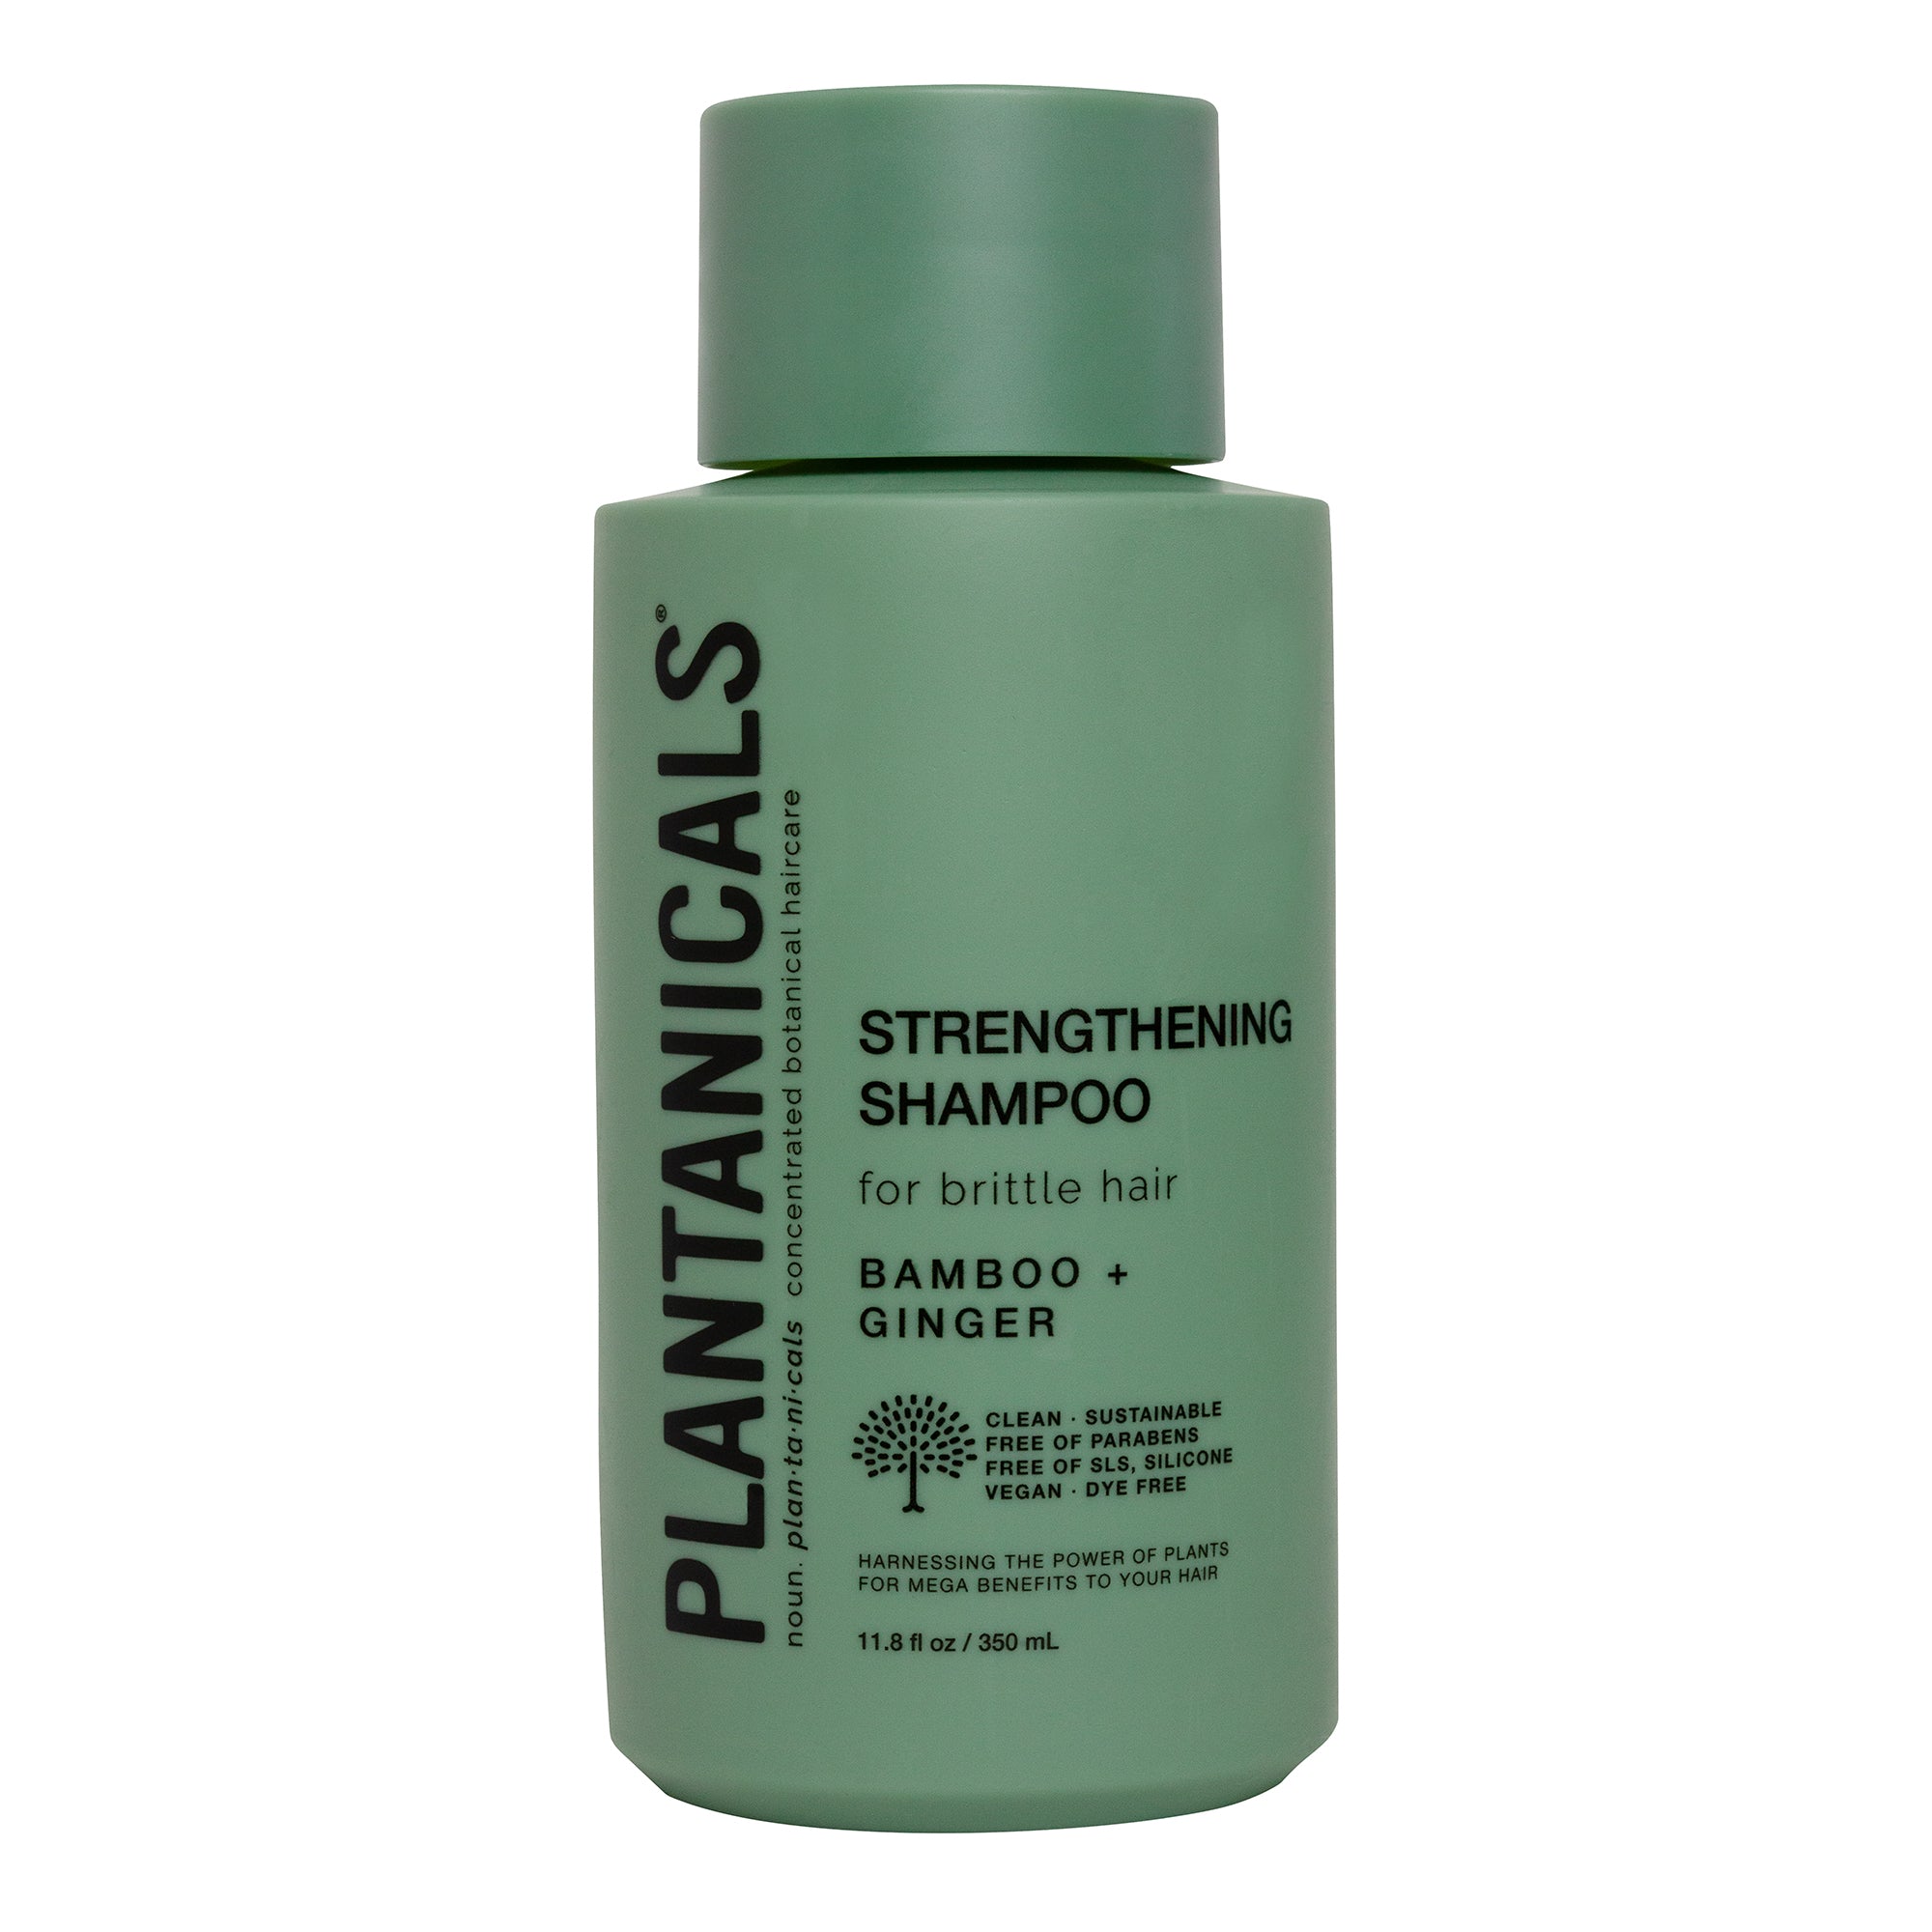 *New & Improved* Strengthening Shampoo